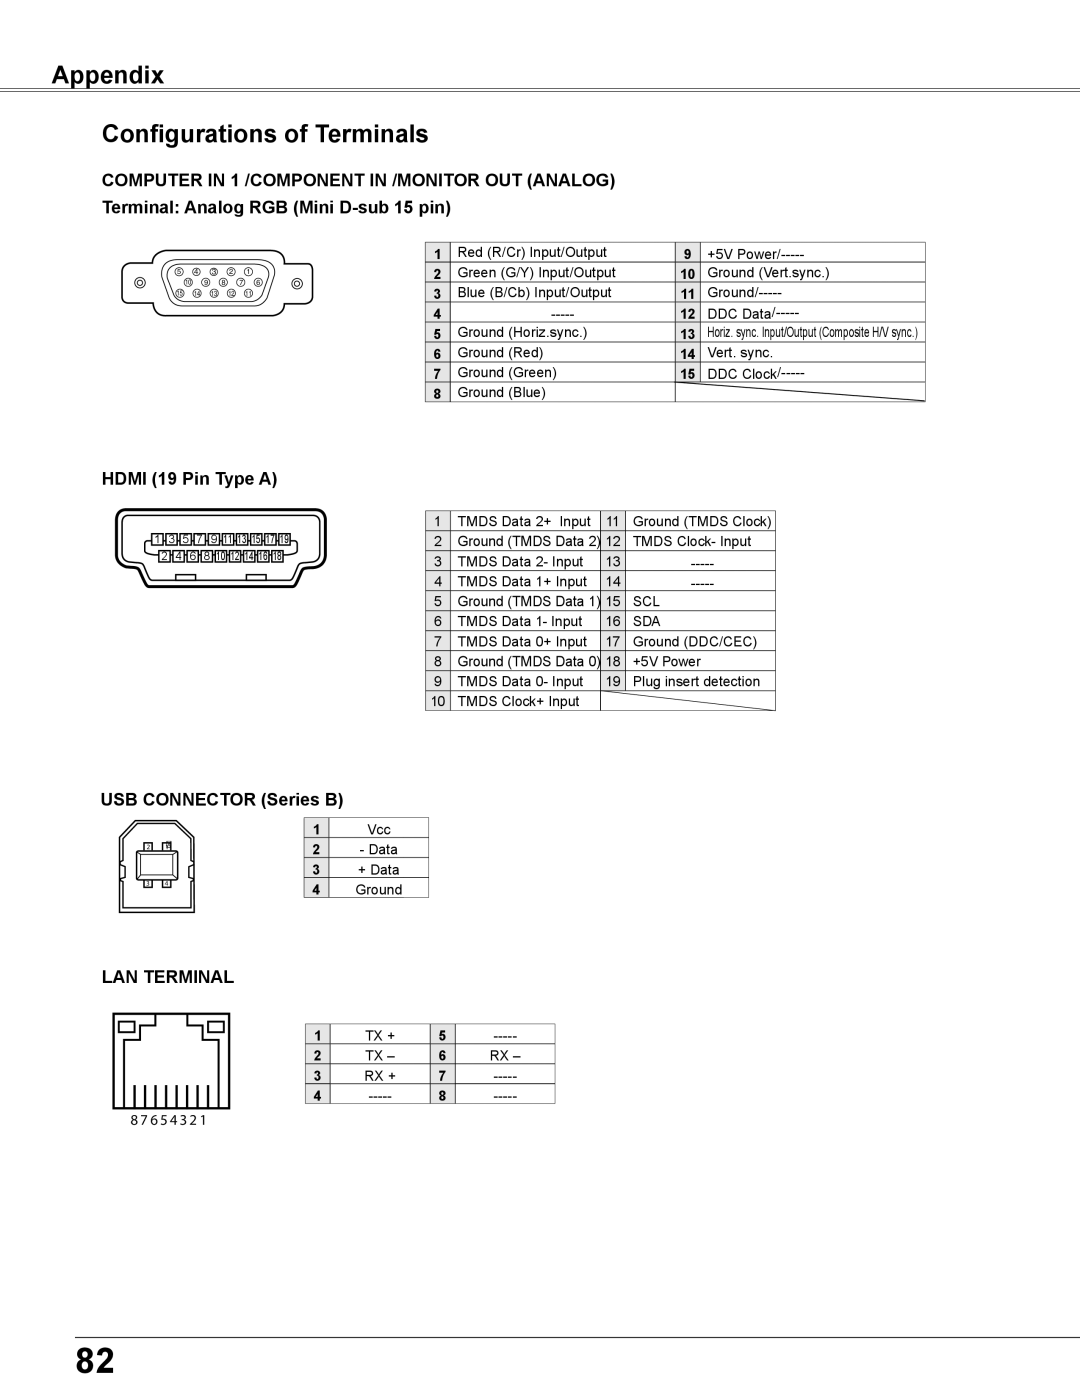 Sanyo WXU700A Appendix Configurations of Terminals, HDMI 19 Pin Type A, USB CONNECTOR Series B, Lan Terminal, + Data 